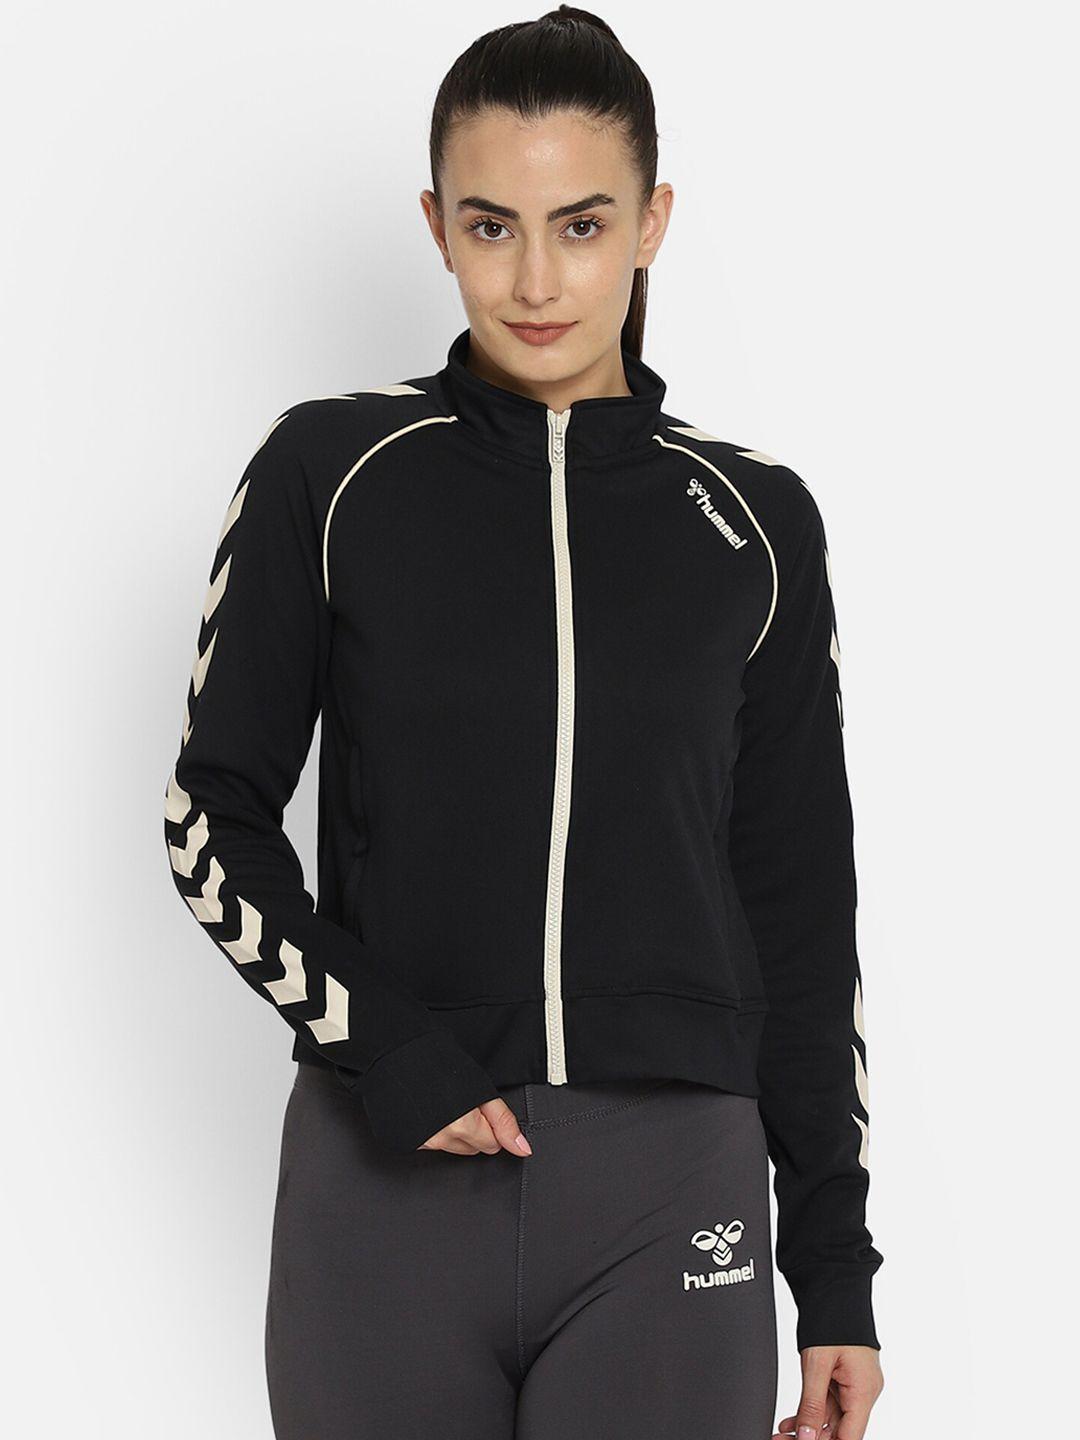 hummel women black & off white geometric sporty jacket